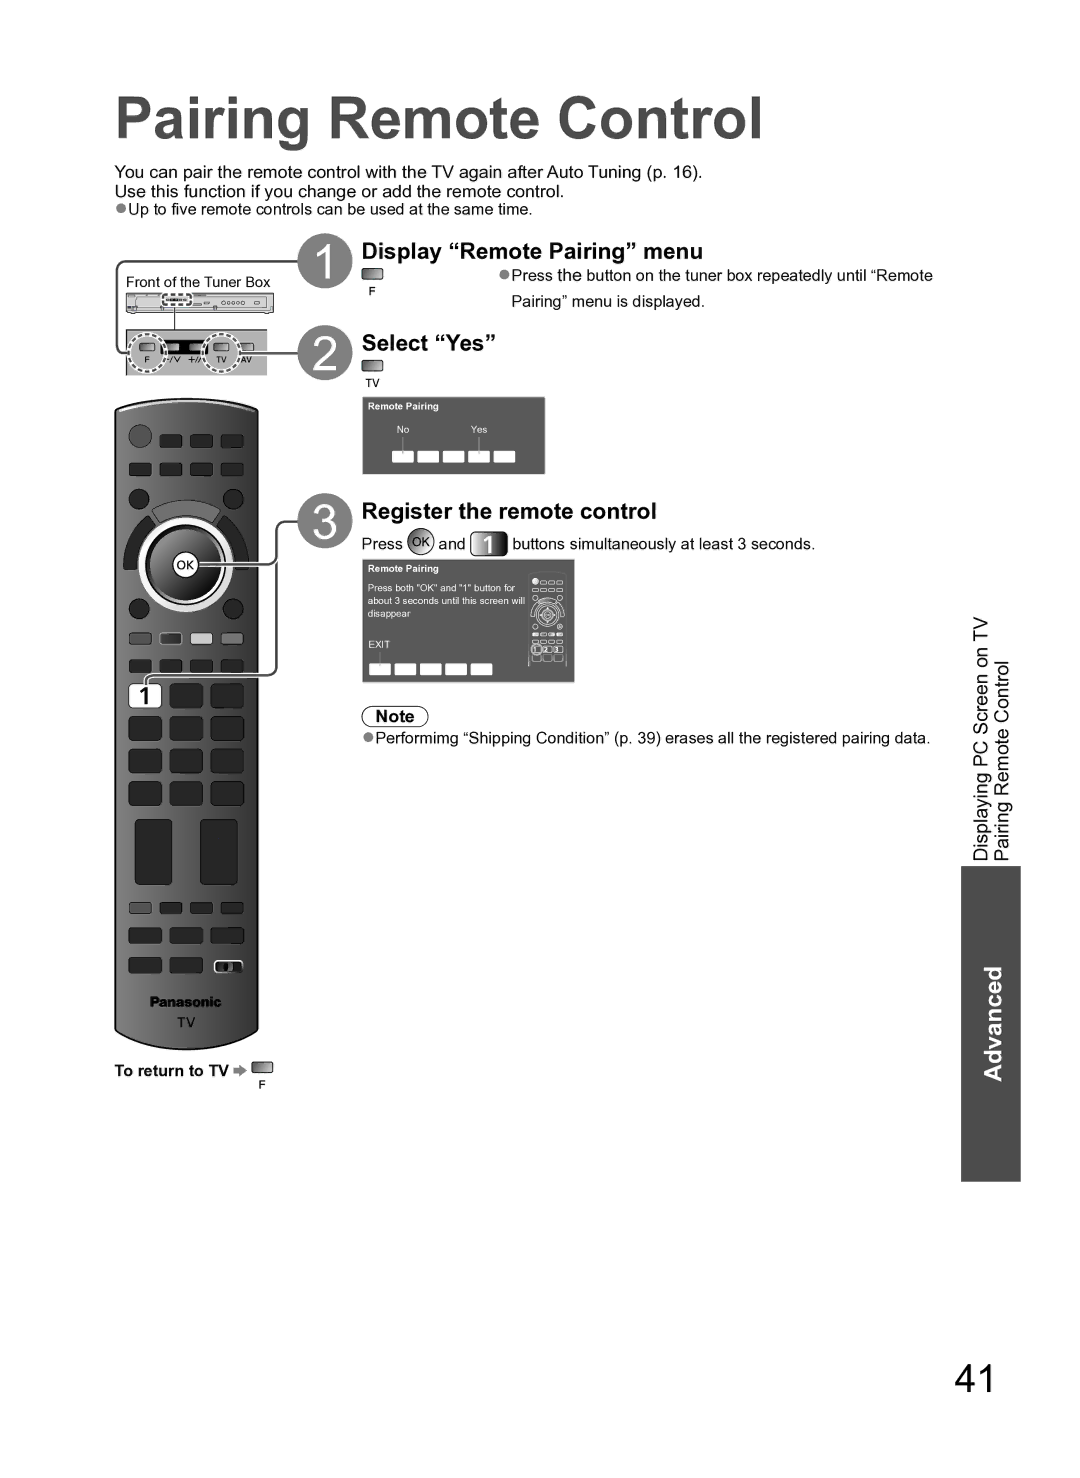 Panasonic TH-P54Z10H manual Pairing Remote Control, Display Remote Pairing menu, Select Yes, Register the remote control 